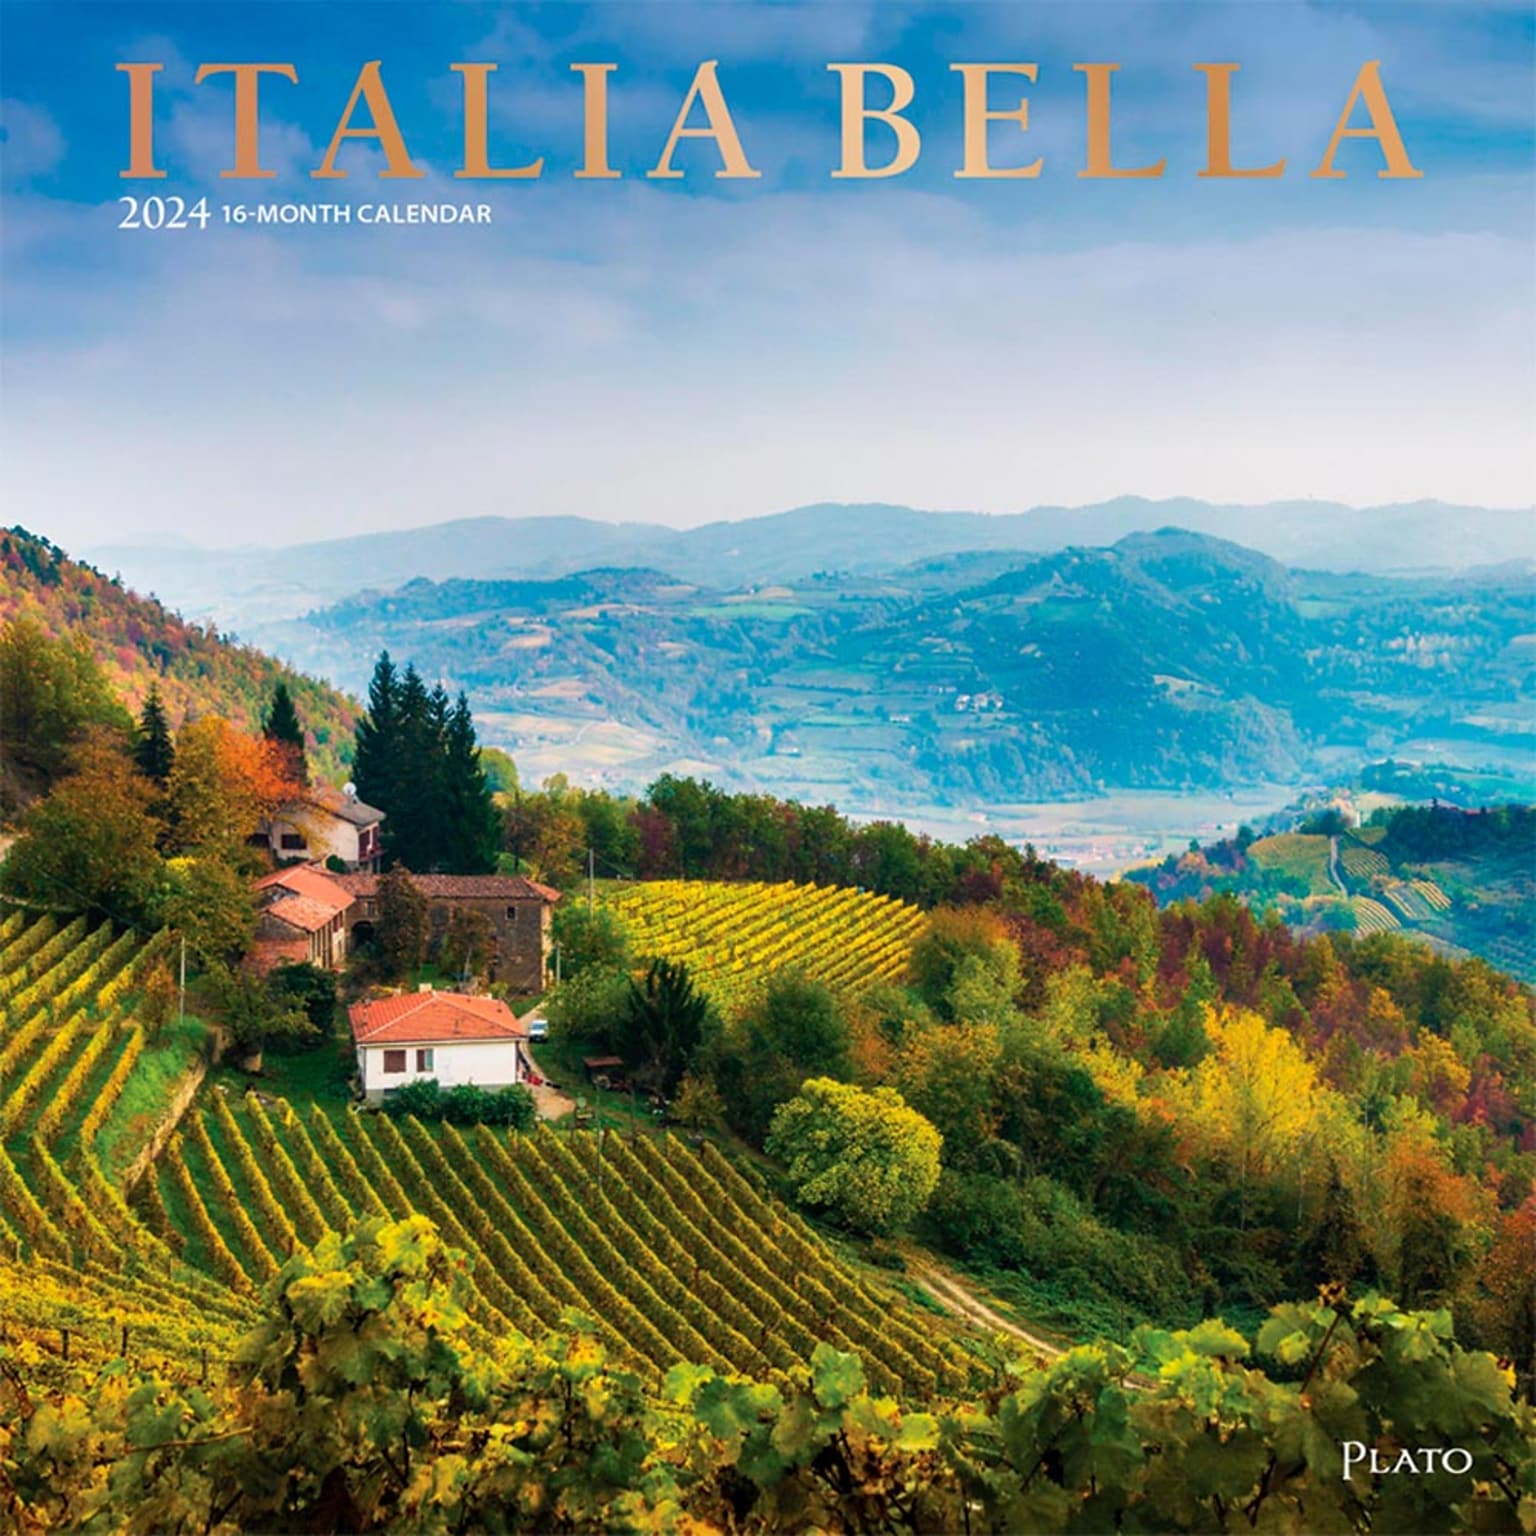 2024 Plato Italia Bella 12 x 24 Monthly Wall Calendar (9781975465933)